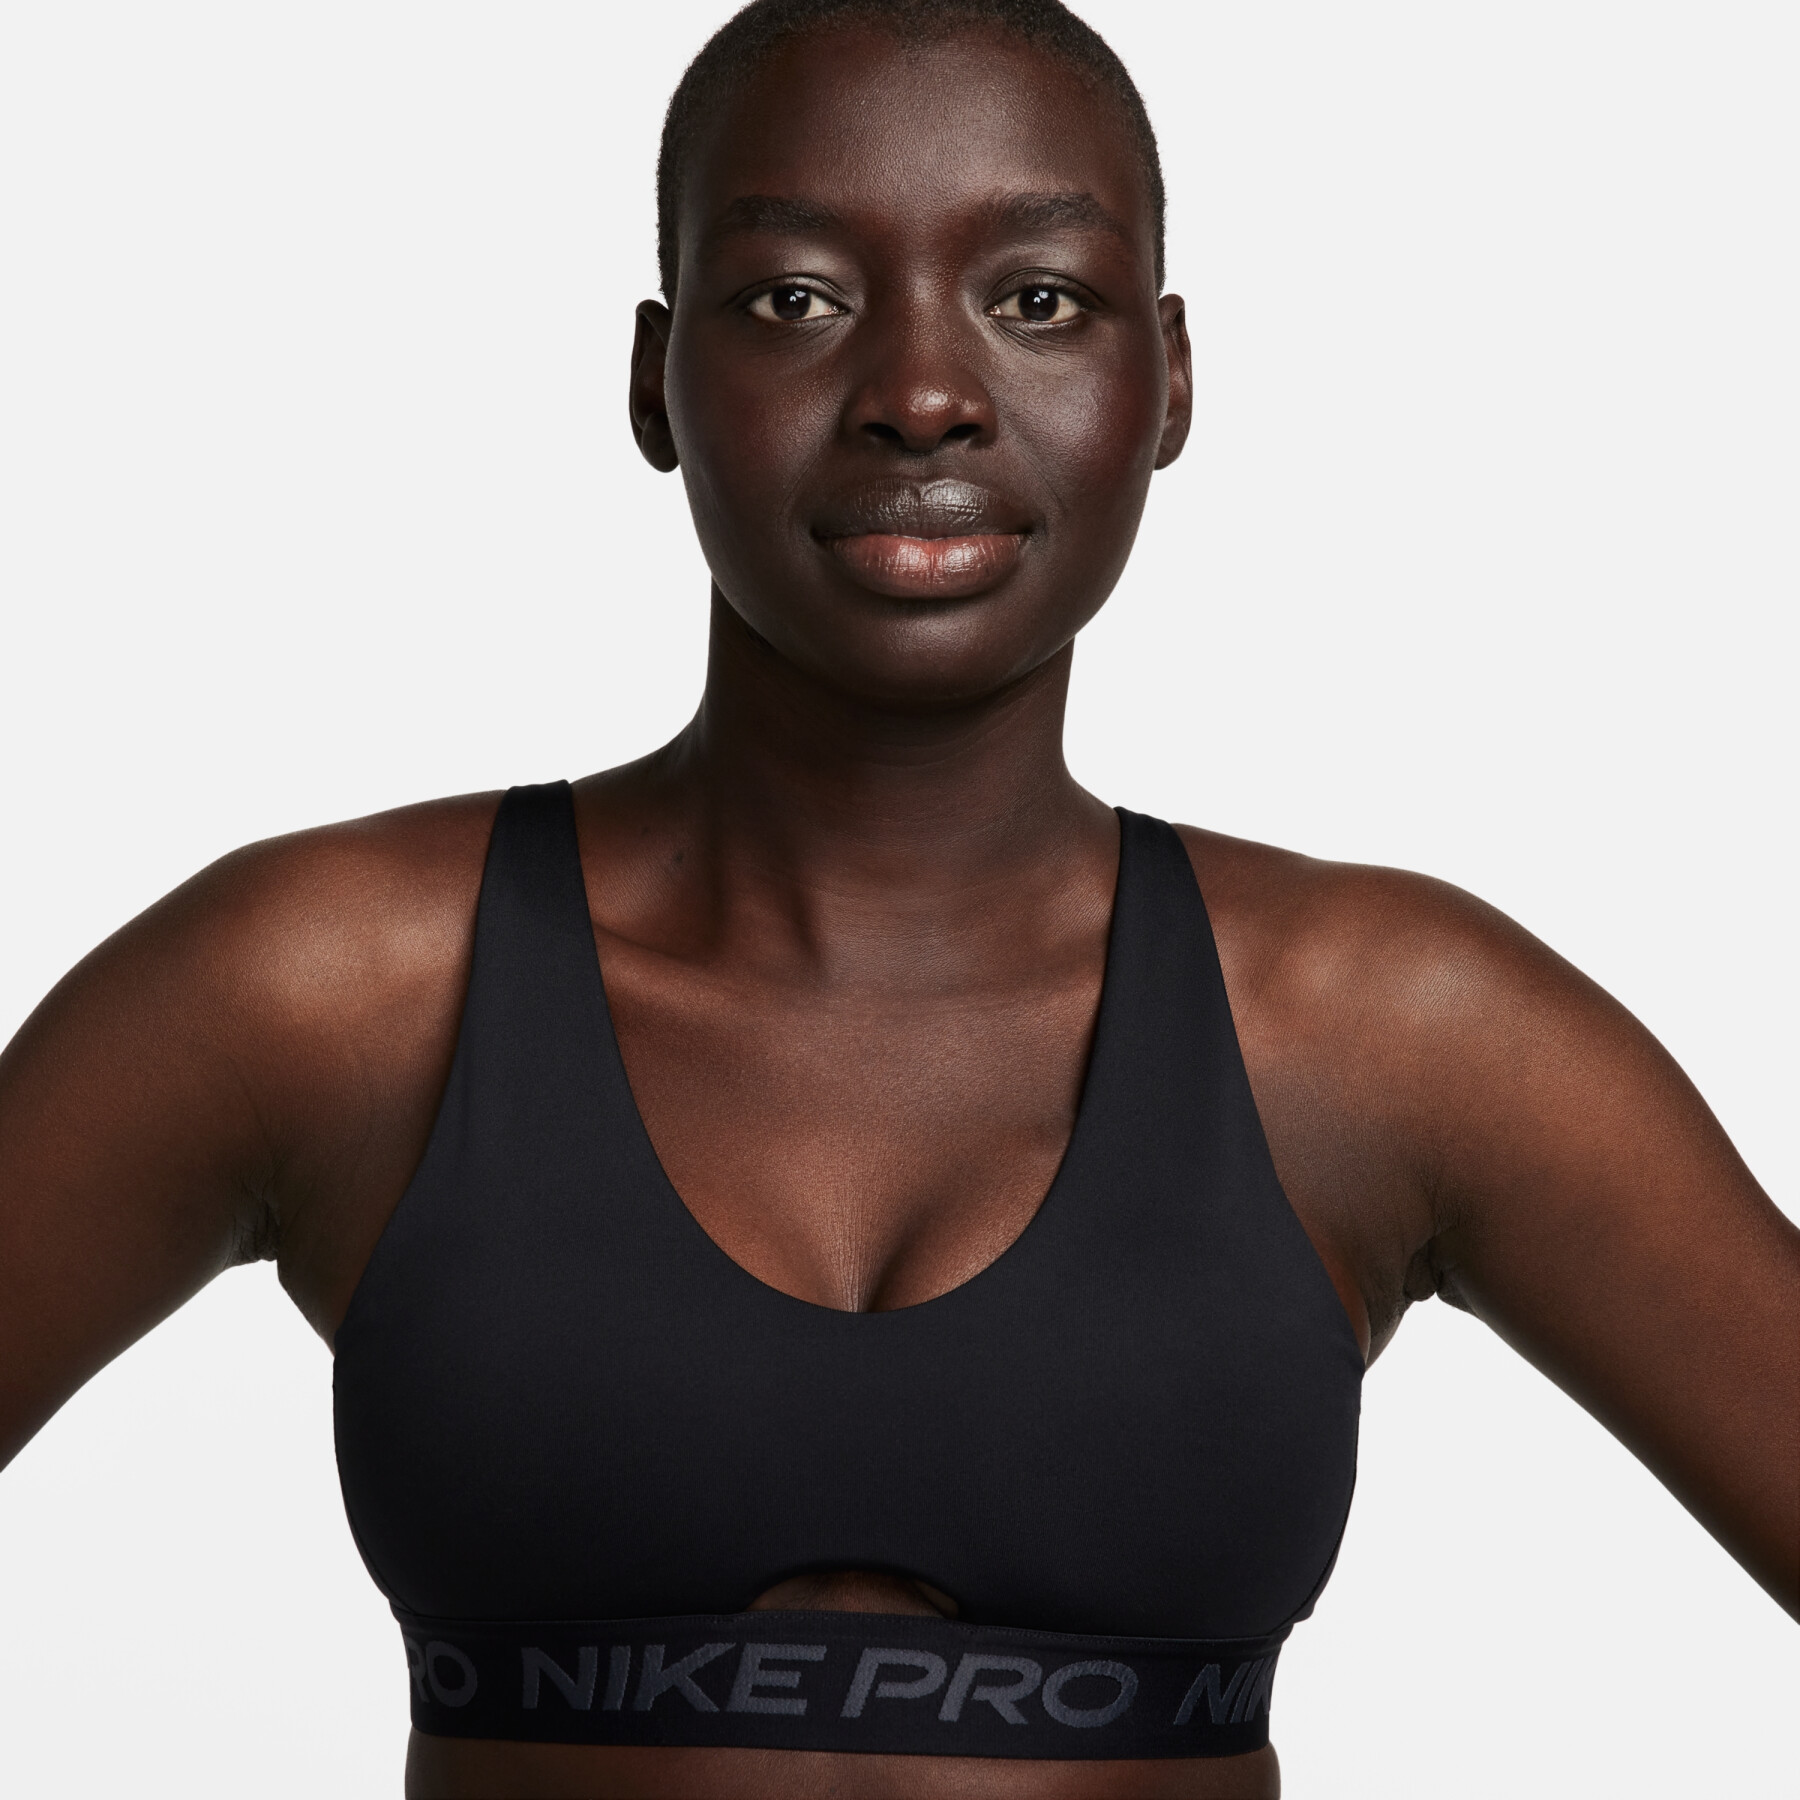 Brassière femme Nike Pro Indy Plunge